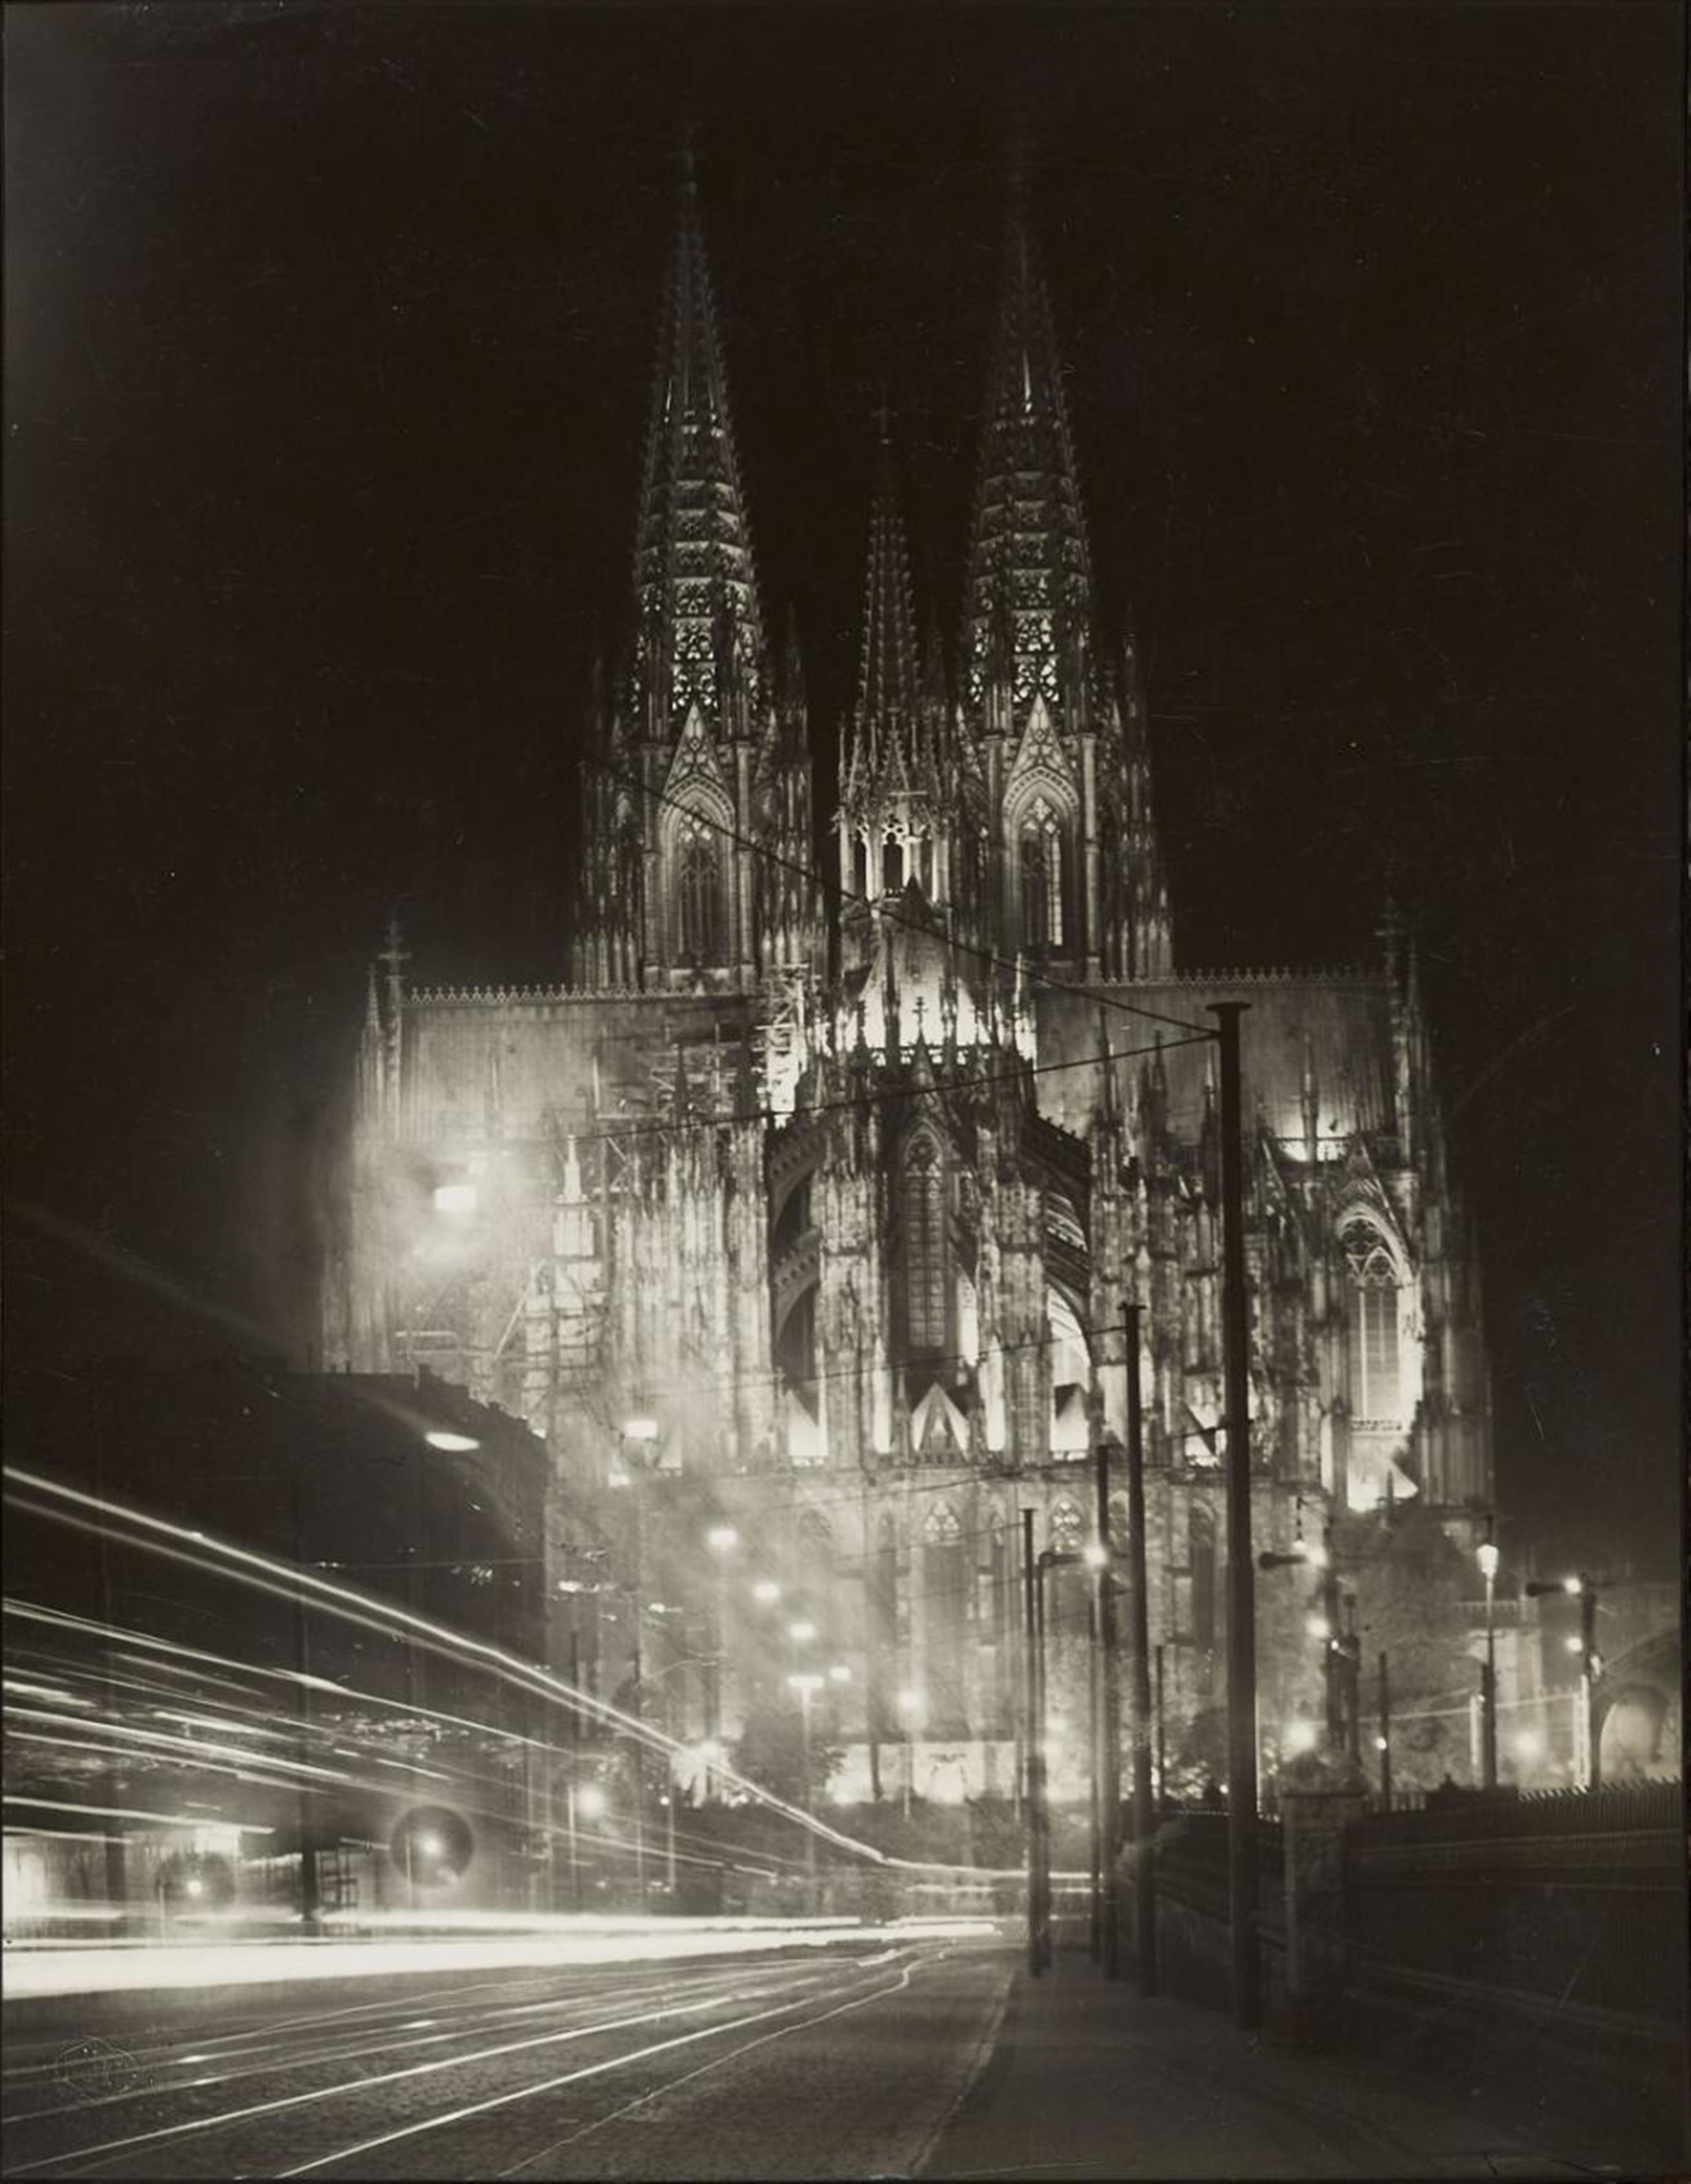 August Sander - Der Kölner Dom in Festbeleuchtung, Ostseite (Cologne Cathedral illuminated) - image-1